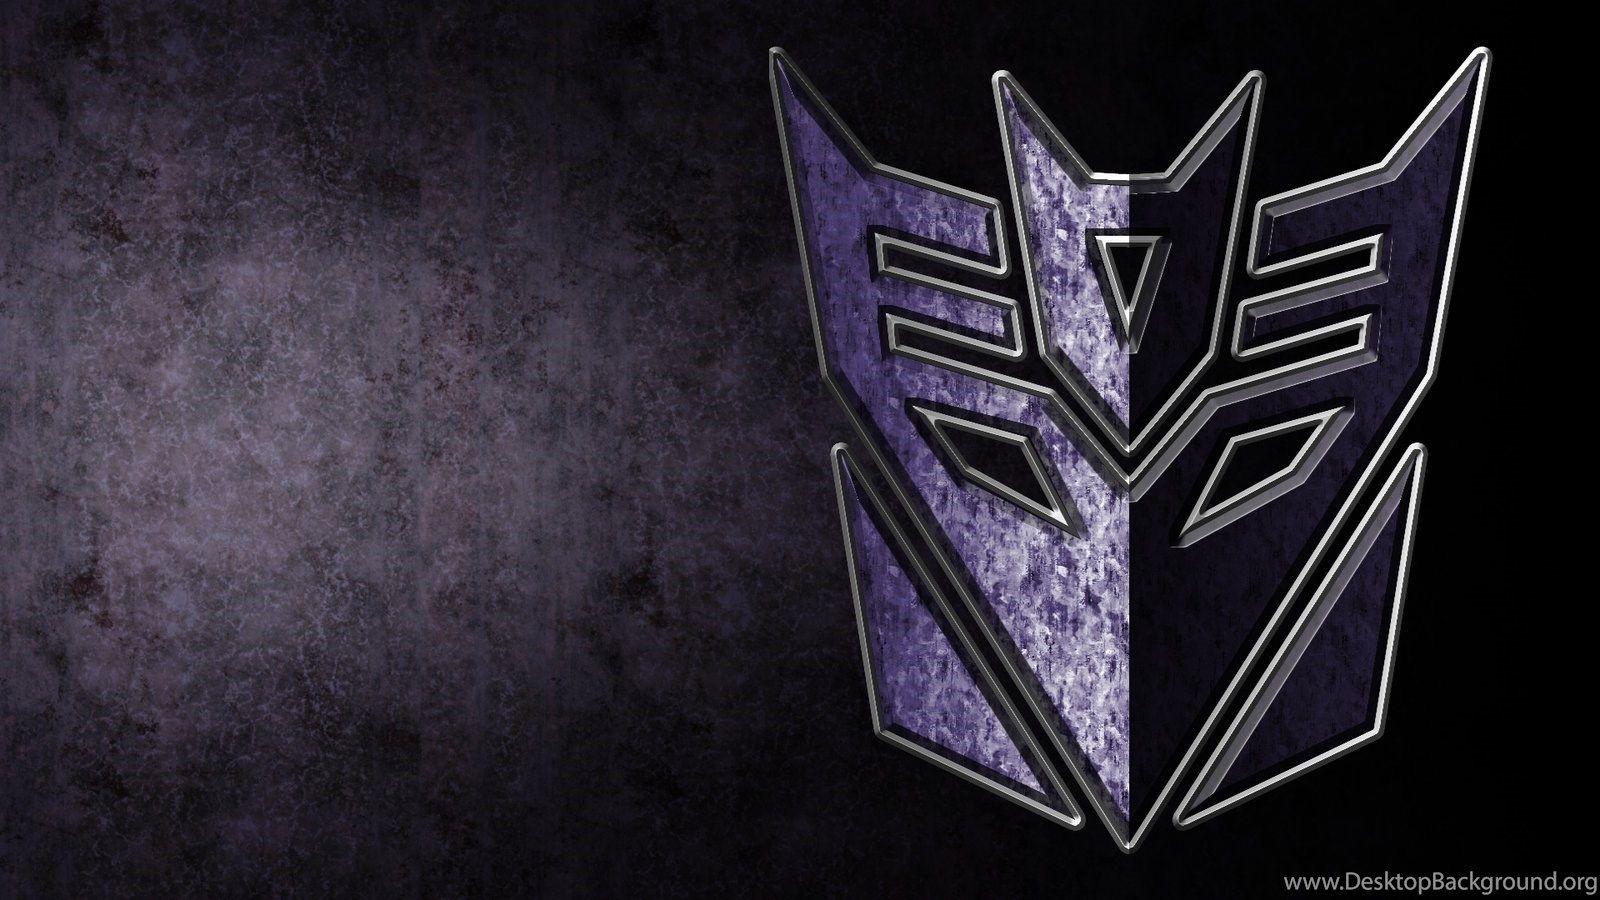 Transformers Decepticons Logo Wallpaper Image Desktop Background